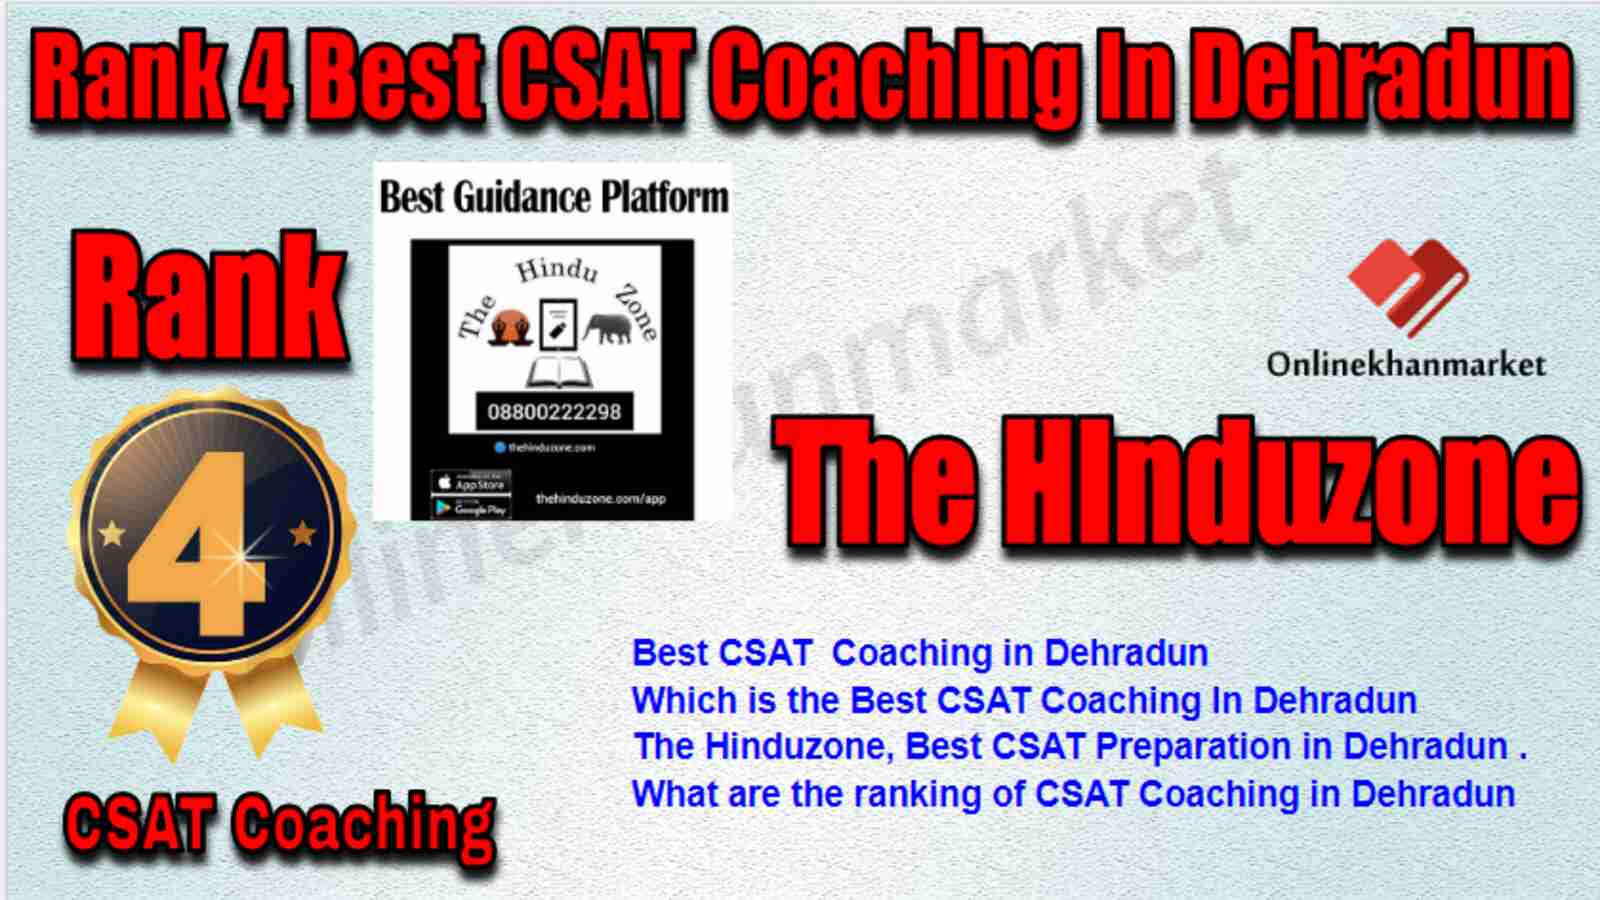 Rank 4 Best CSAT Coaching in Dehradun